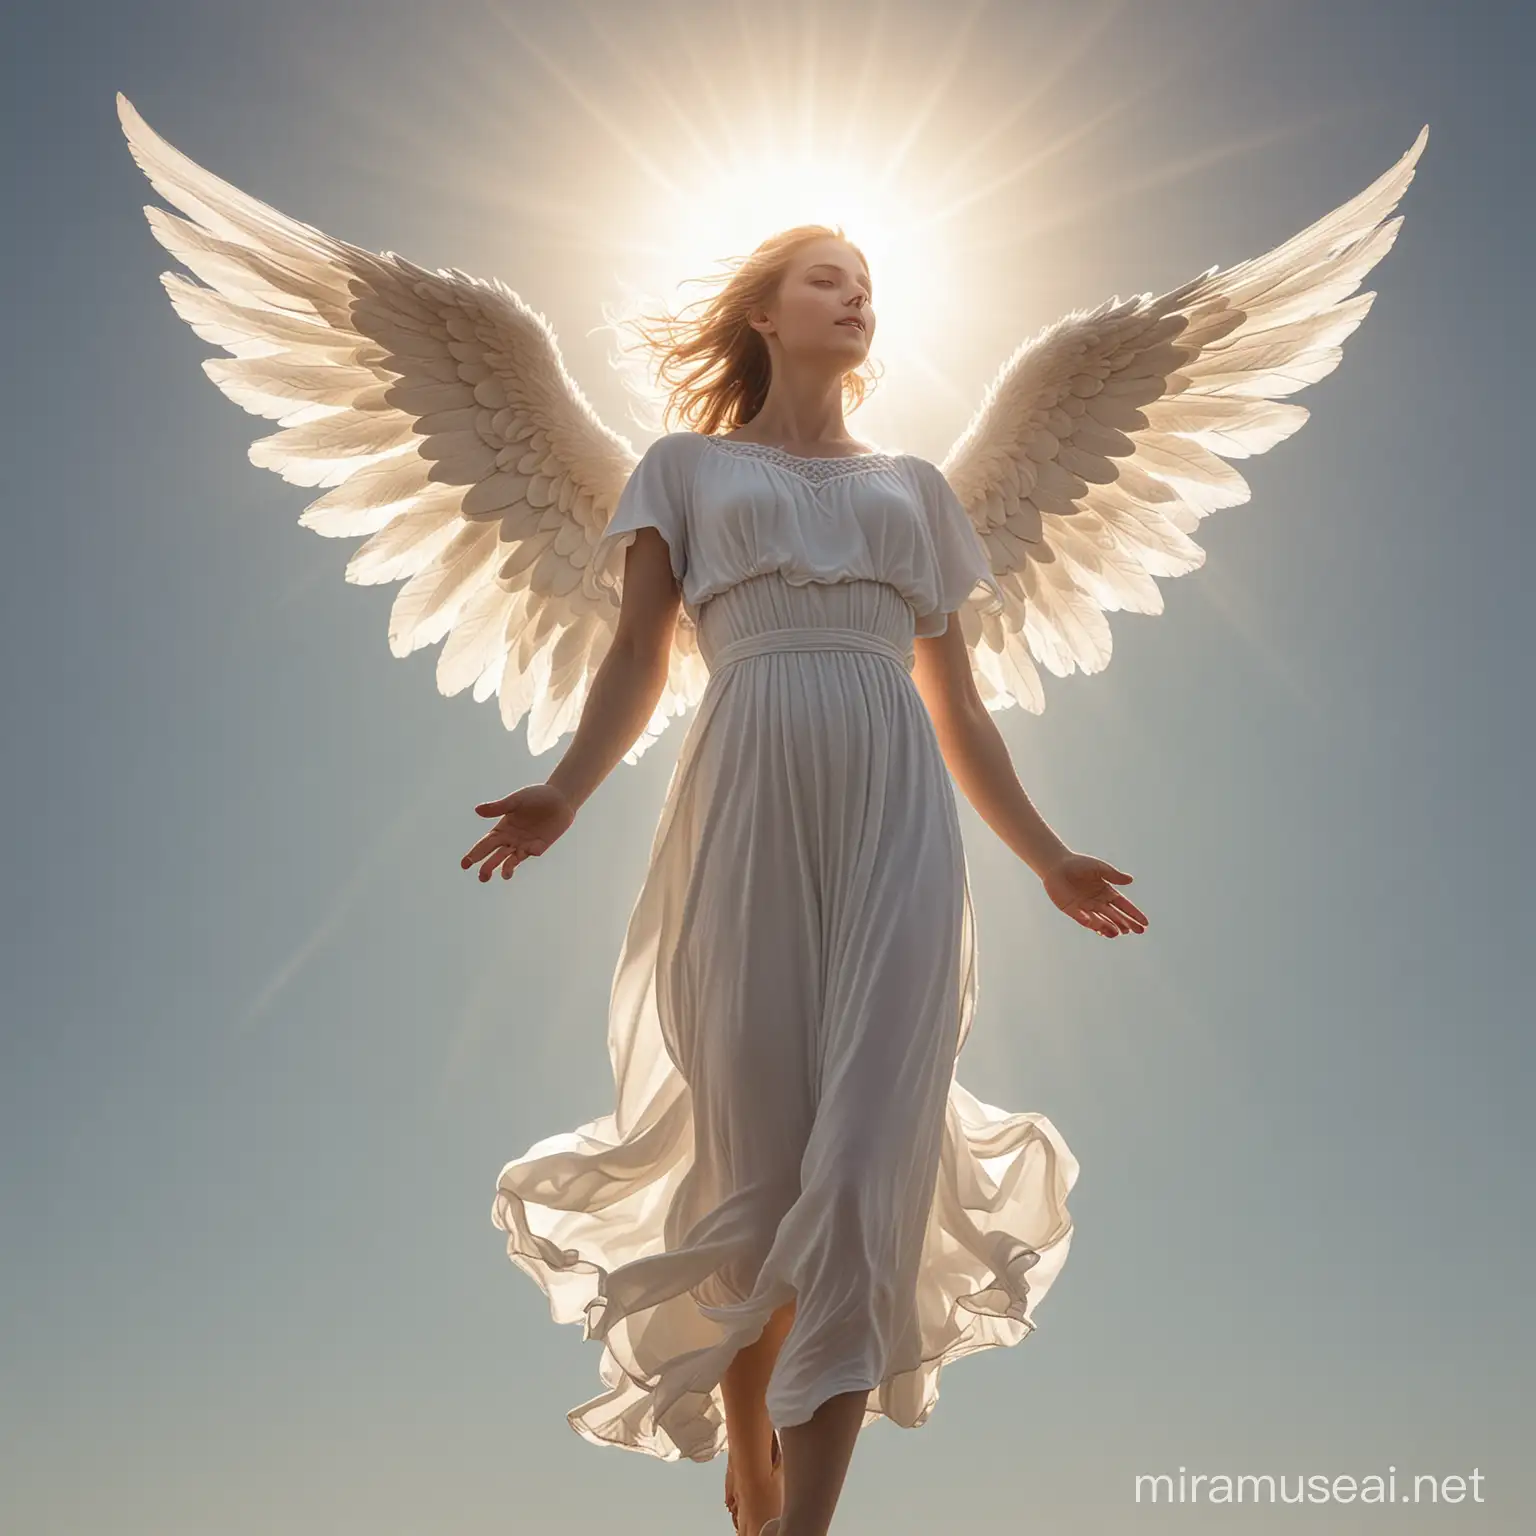 White Angel Descending from the Sun in Ethereal Light